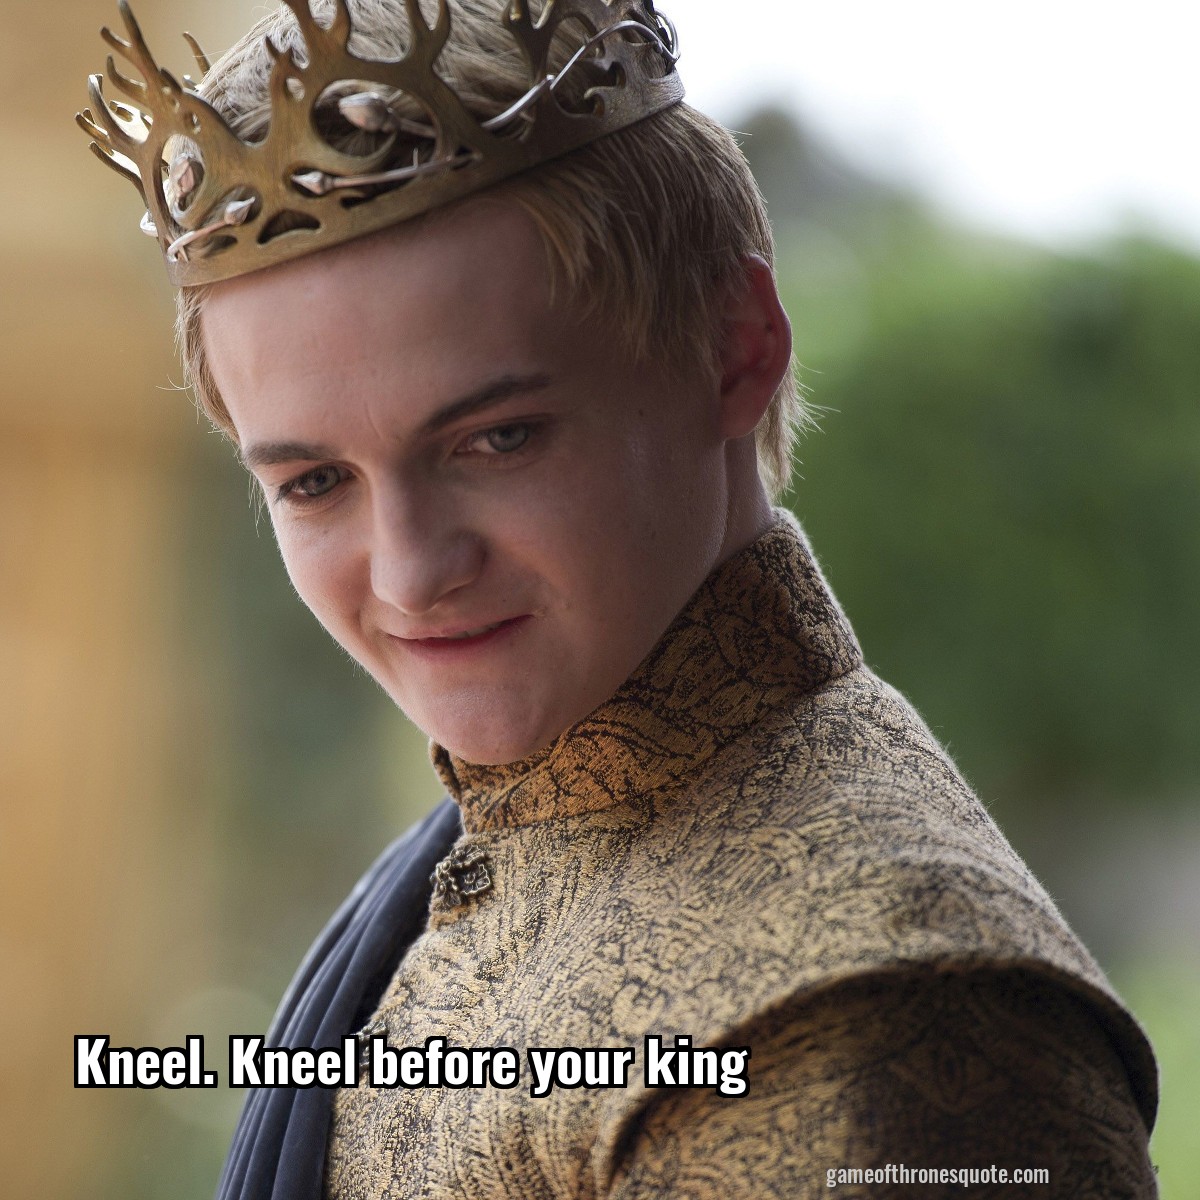 Kneel before your king..